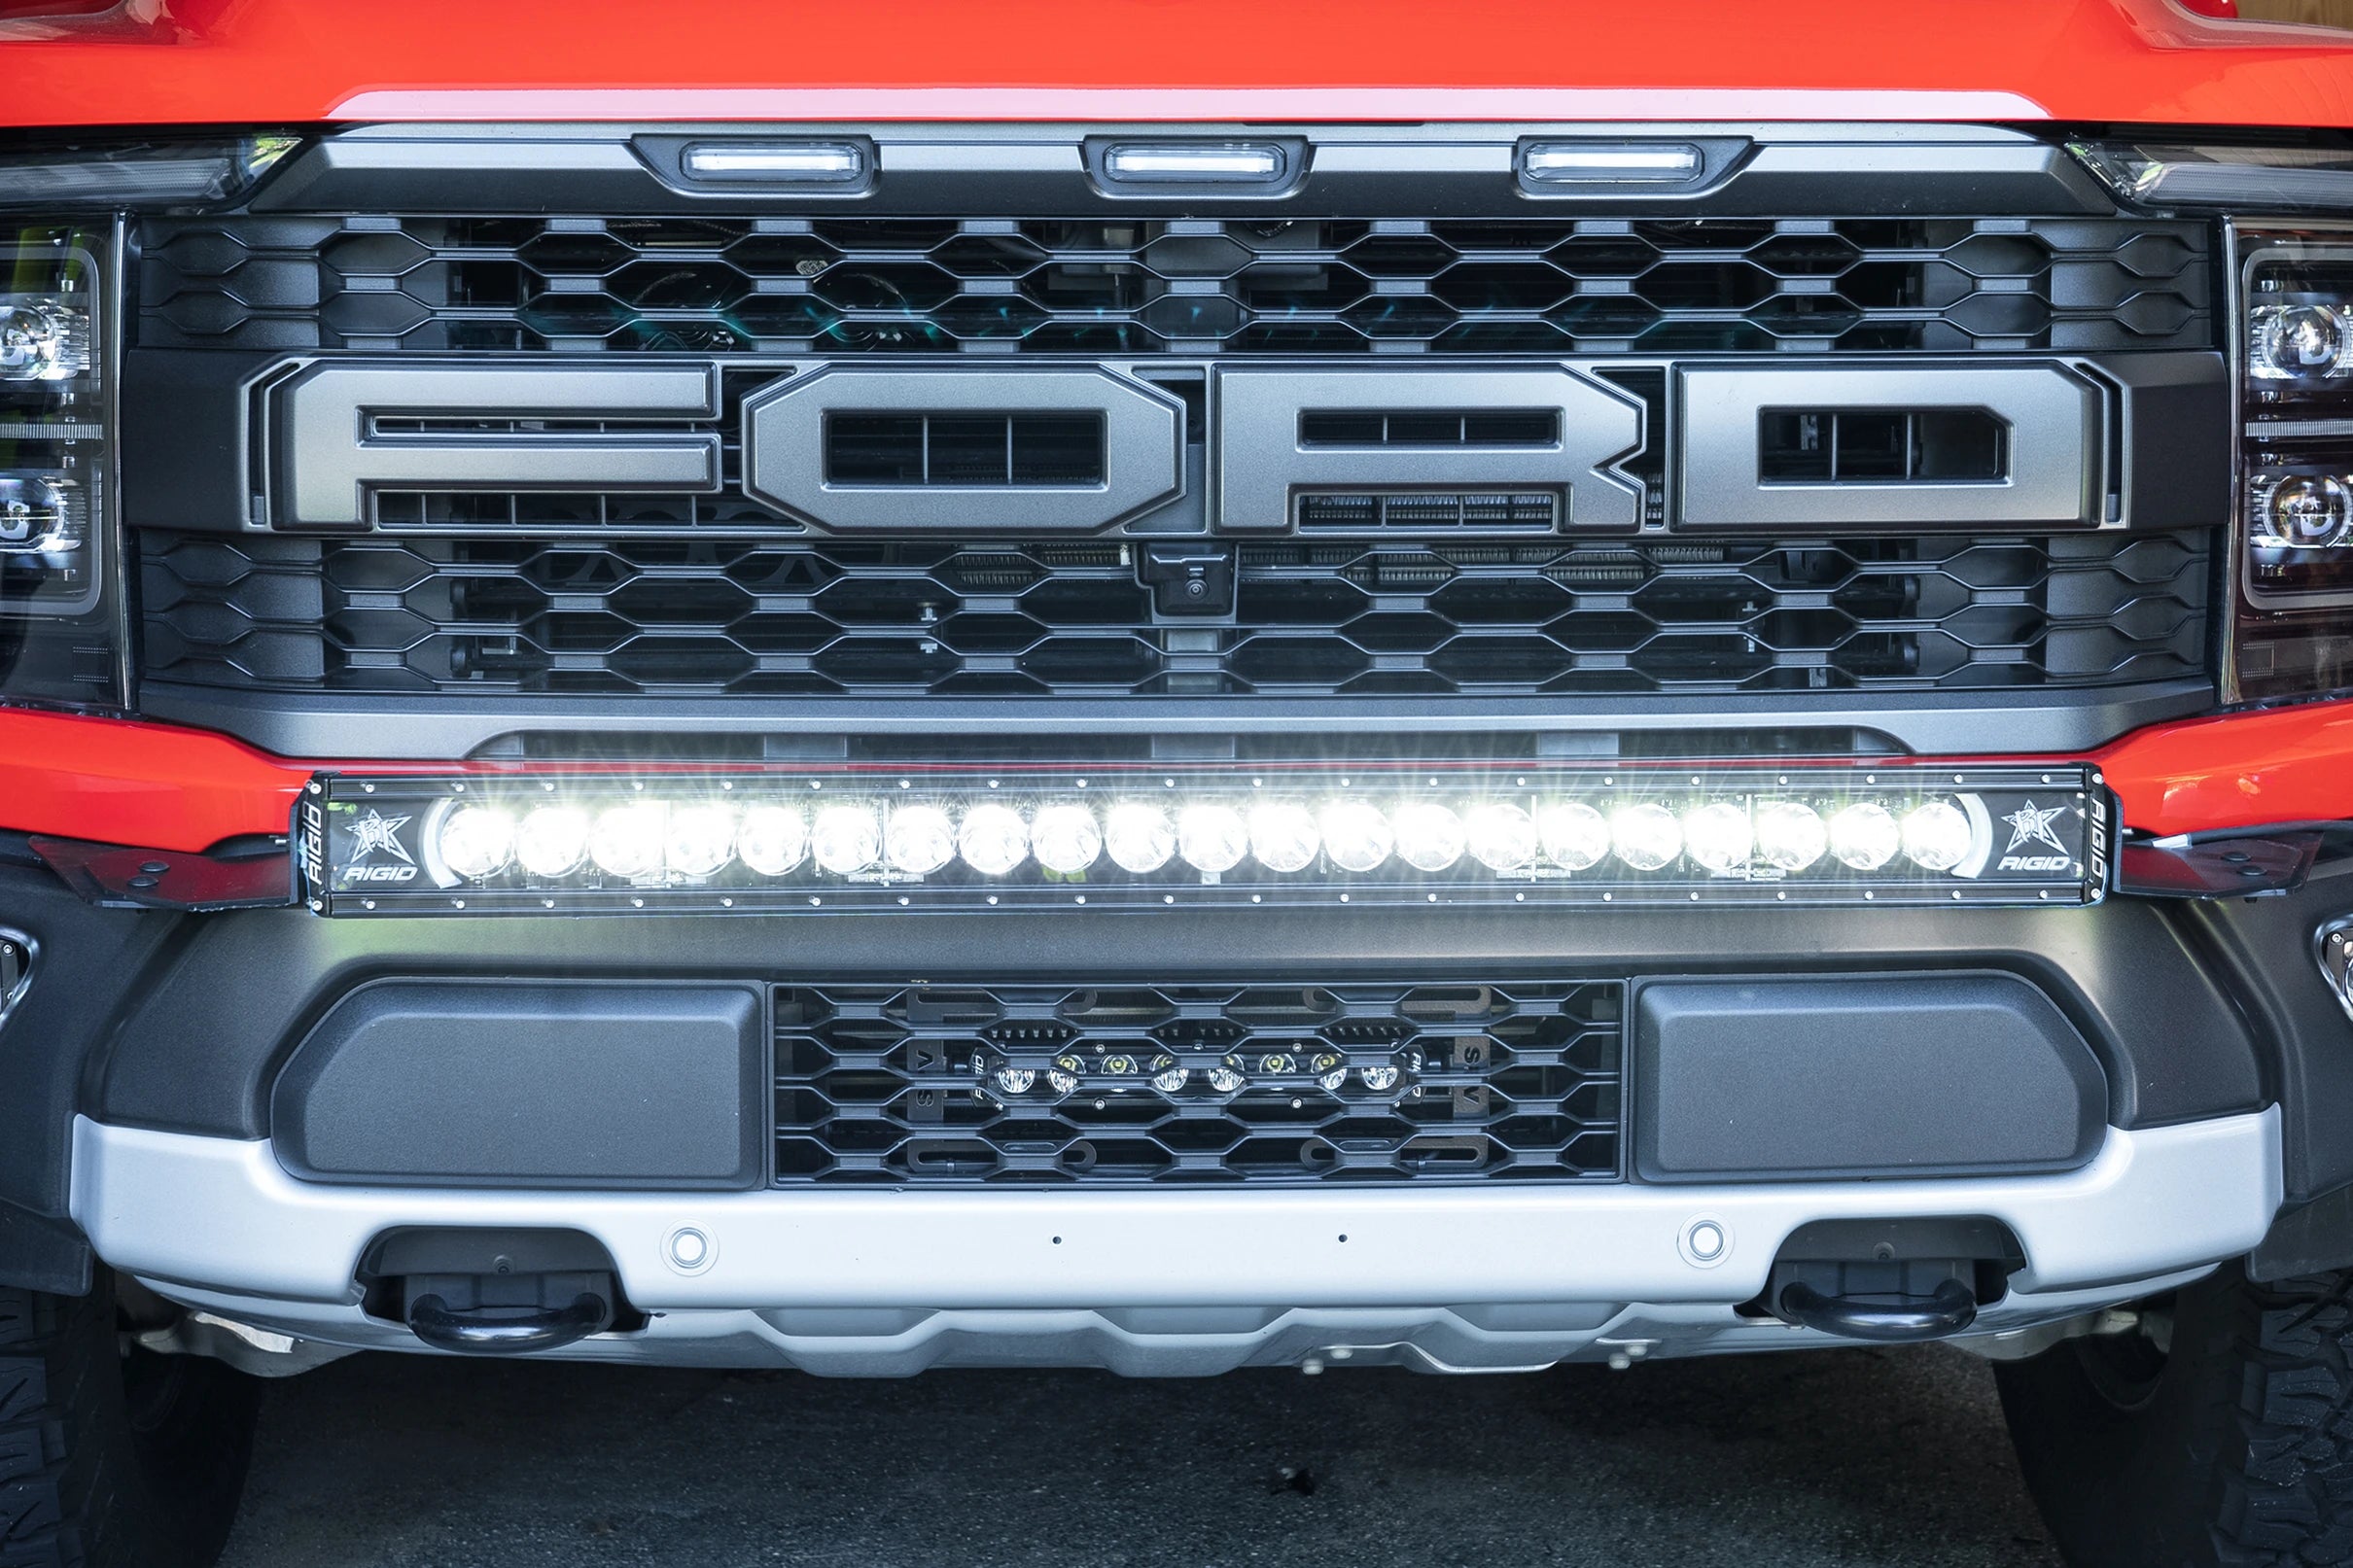 SPV Parts 2021+ Gen 3 Ford Raptor Rigid Radiance+ & SR 40 inch Bumper Light Bar Kit